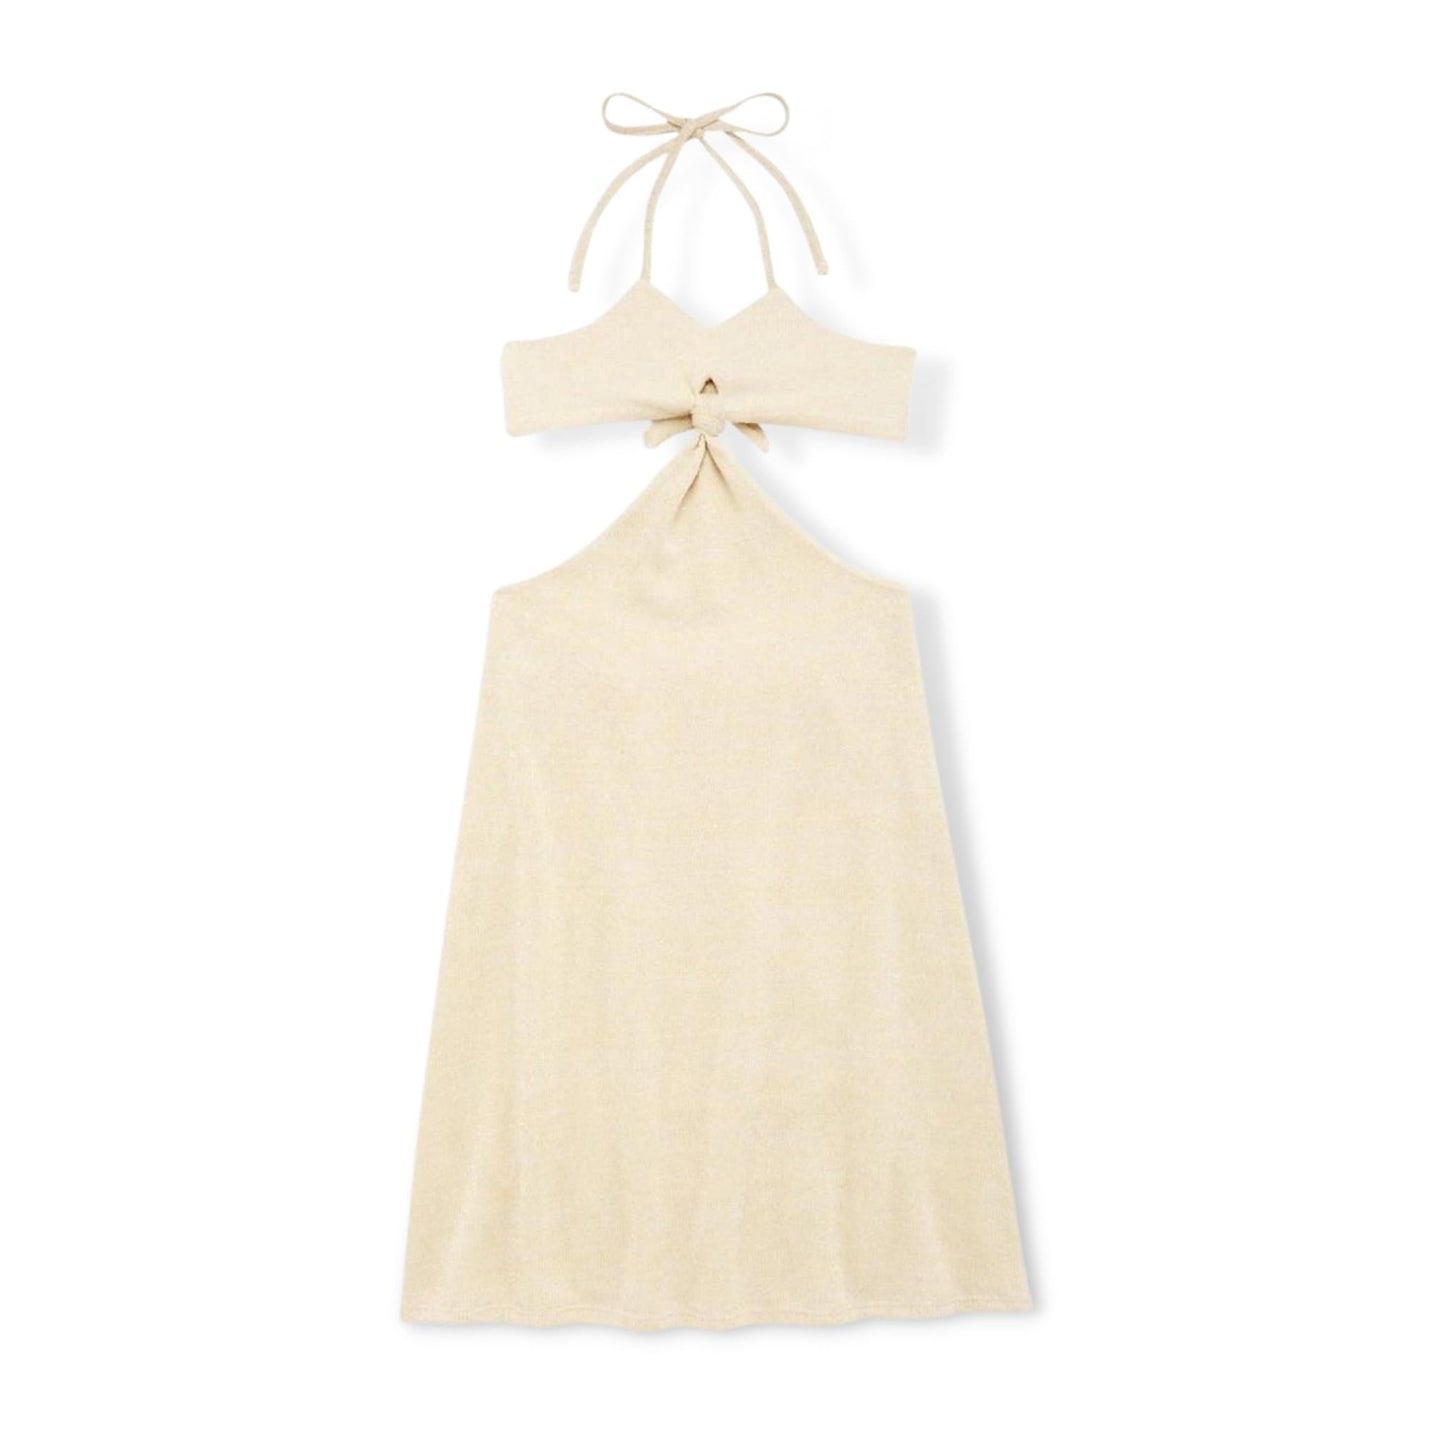 Little Peixoto Cinnamon Knit Oliver Dress - a Spirit Animal - Dress $60-$90 $90-$120 active Jun 2022